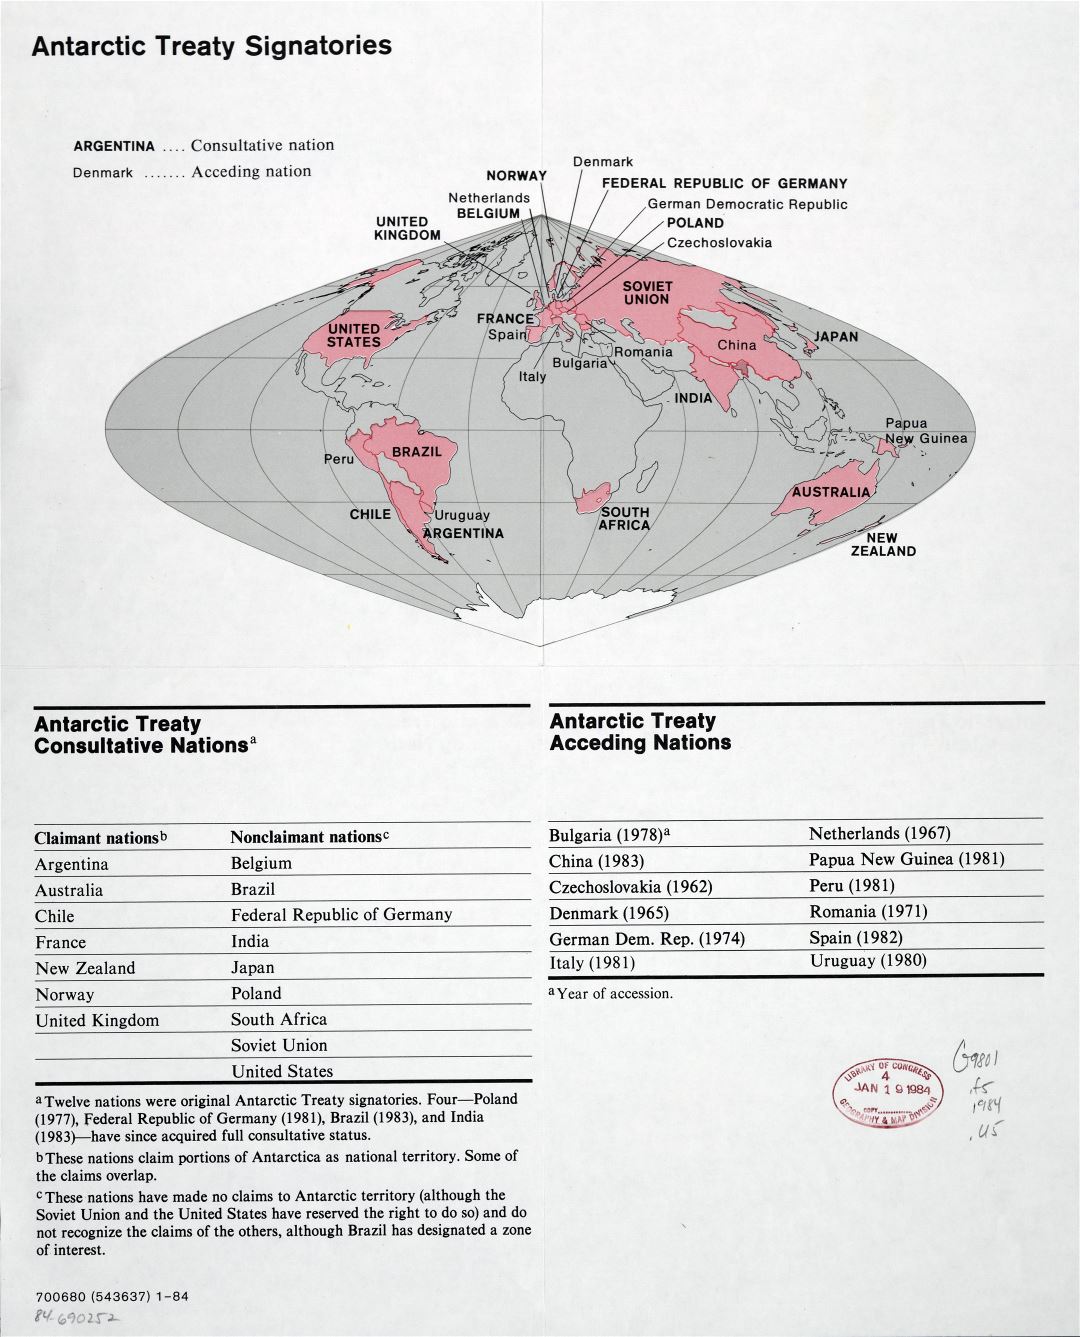 Large scale map of the Antarctic treaty signatories - 1984